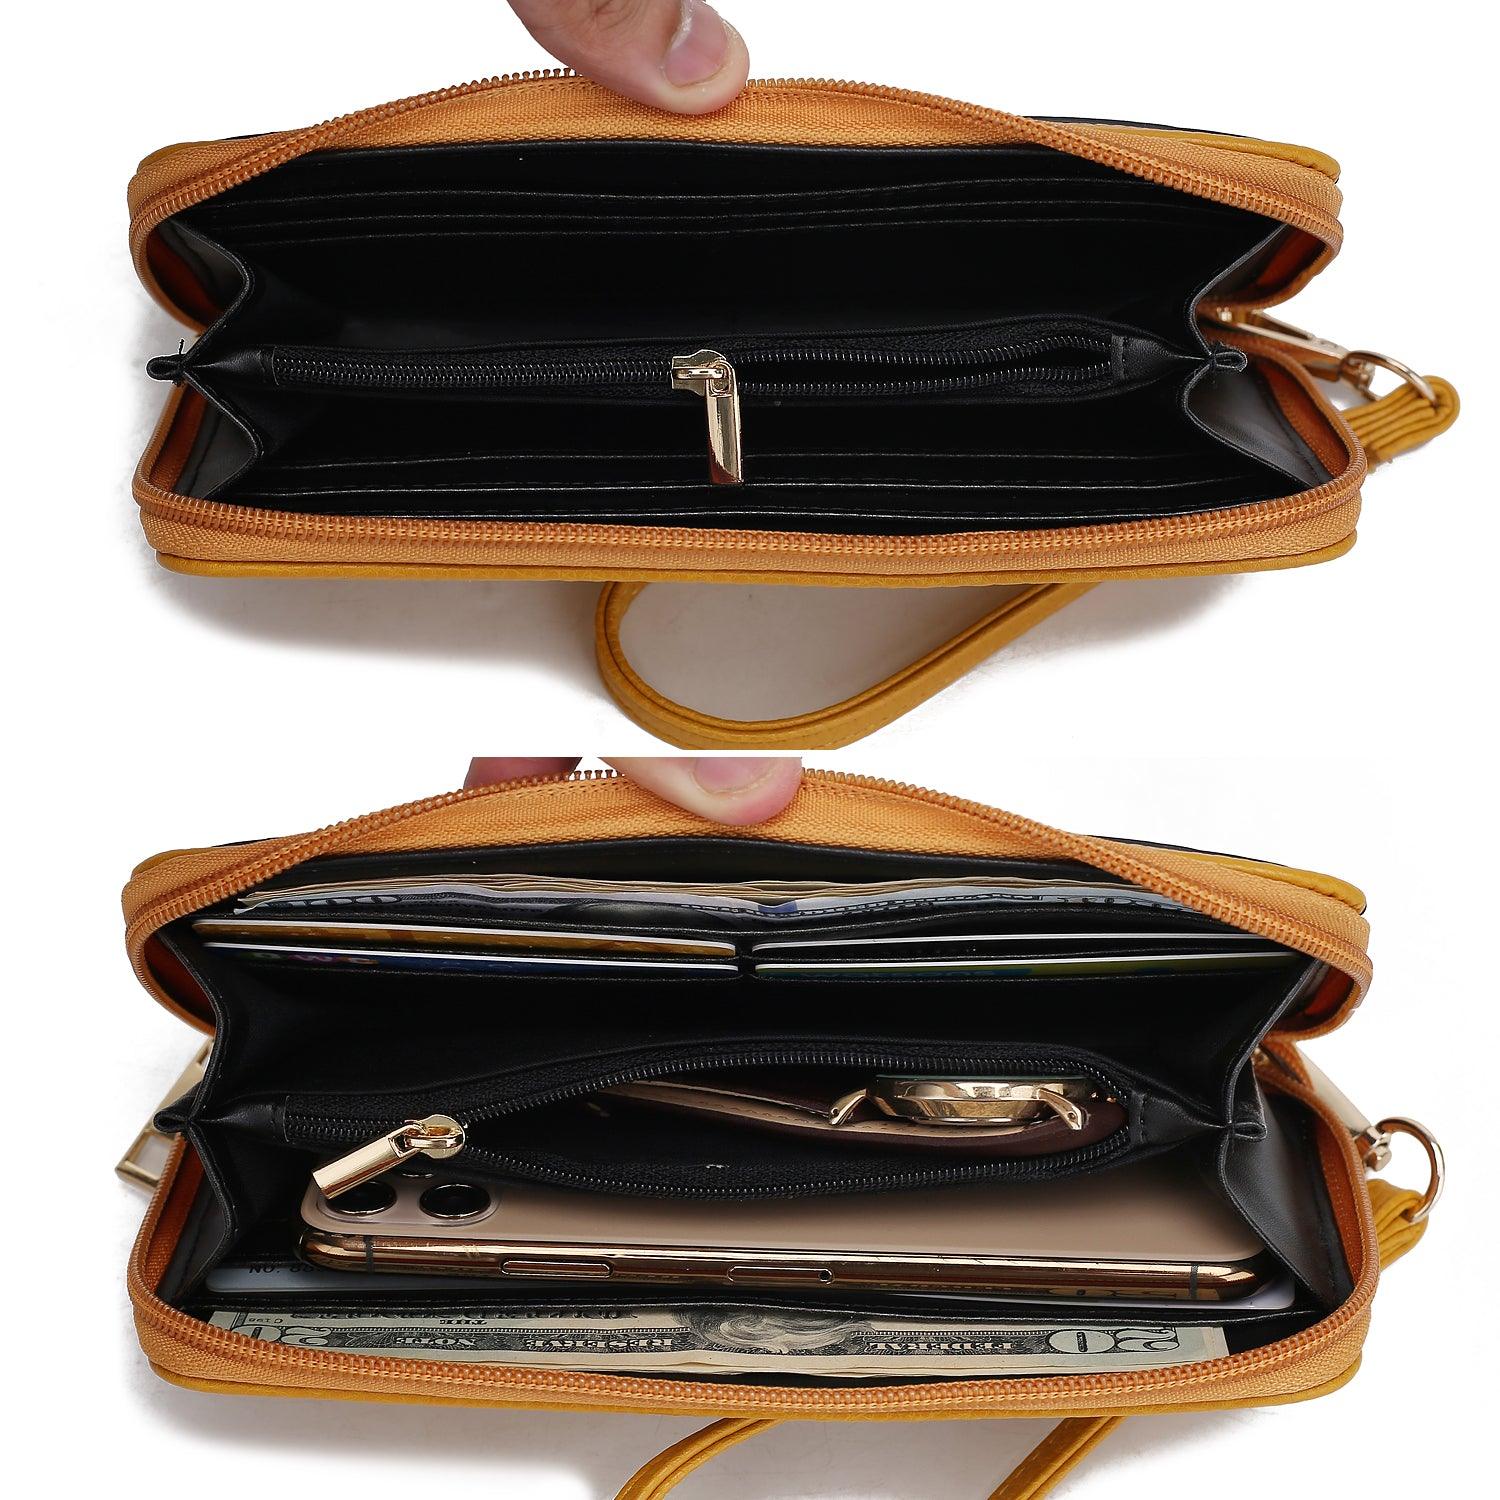 Wallets, Handbags & Accessories Darielle Satchel Bag with Wallet